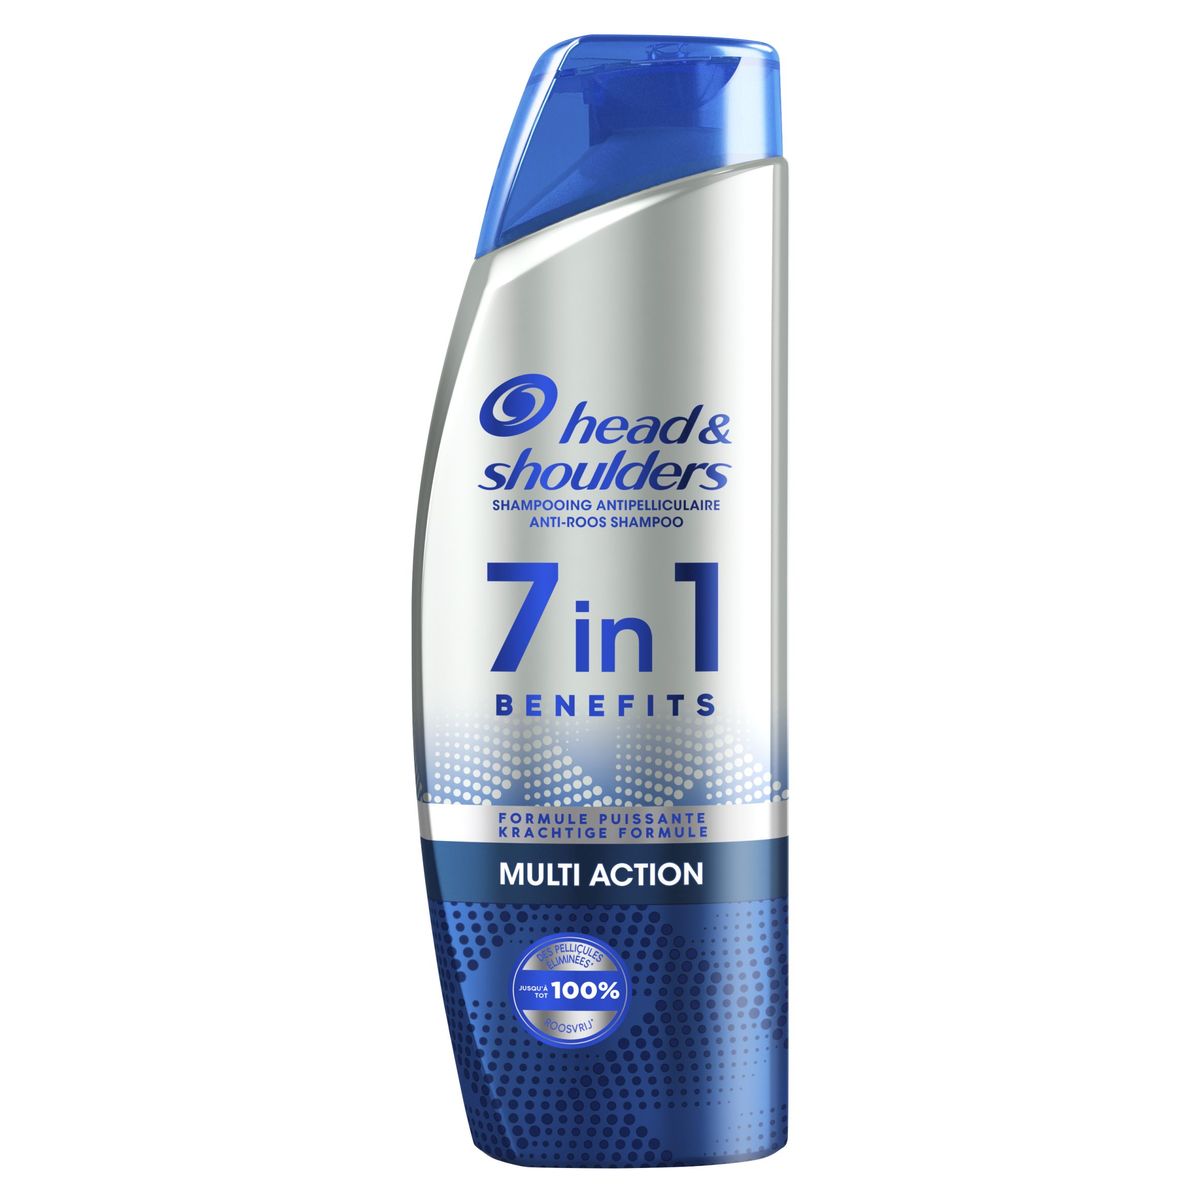 Head & Shoulders 7in1 Multi-Action Anti-roos Shampoo